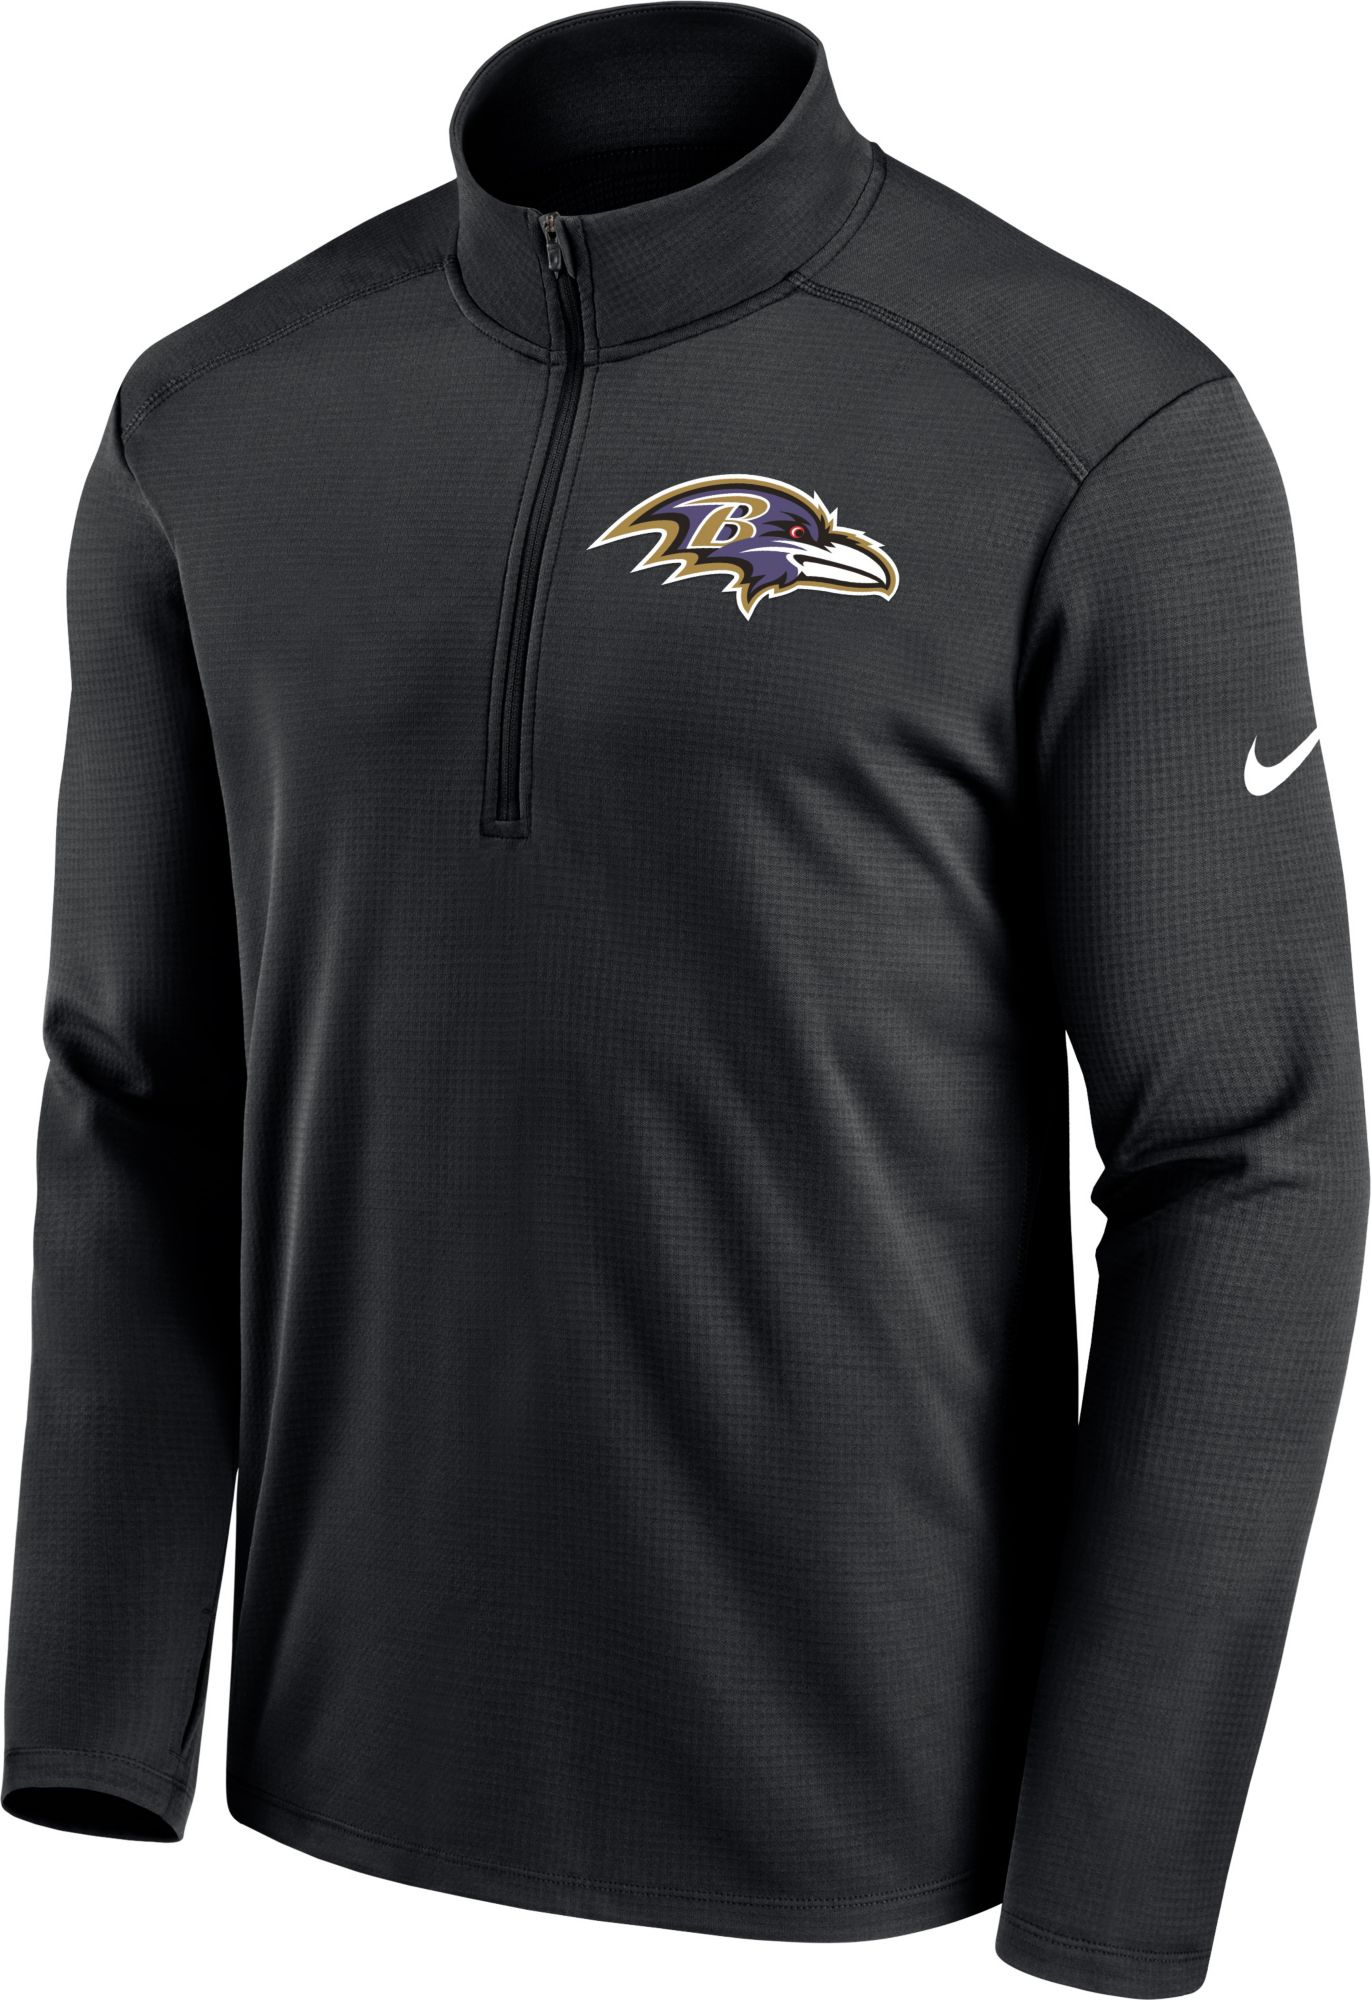 Nike Men's Baltimore Ravens Legend Logo Purple T-Shirt - Each